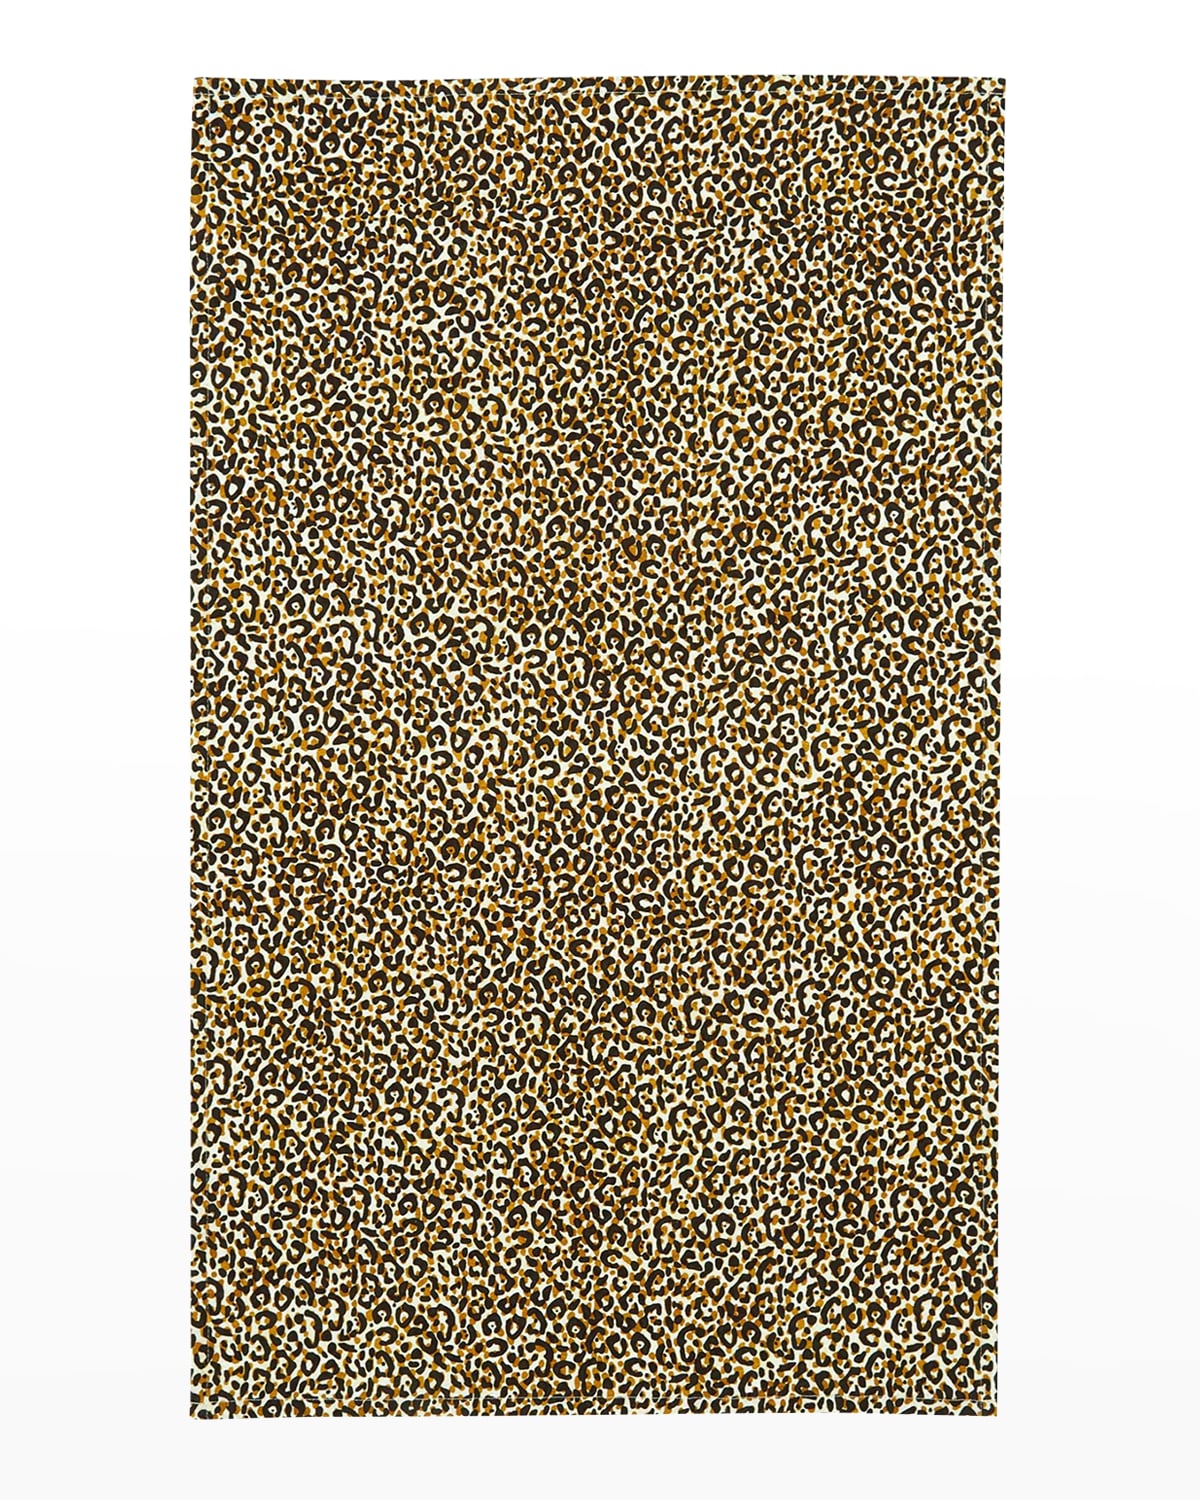 Creatures of Curiosity Leopard Print Tea Towel